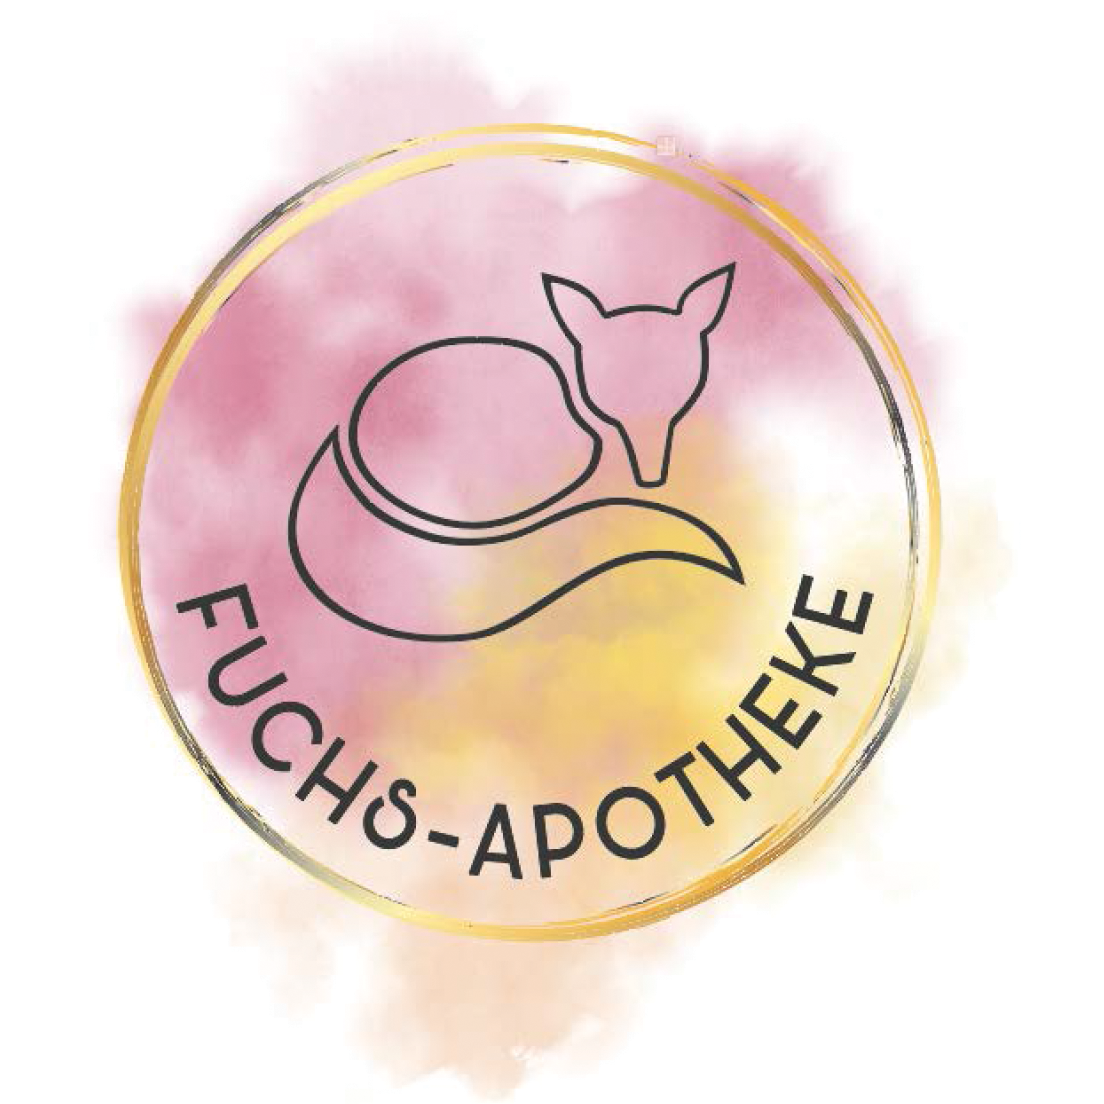 Fuchs-Apotheke in Suhl - Logo